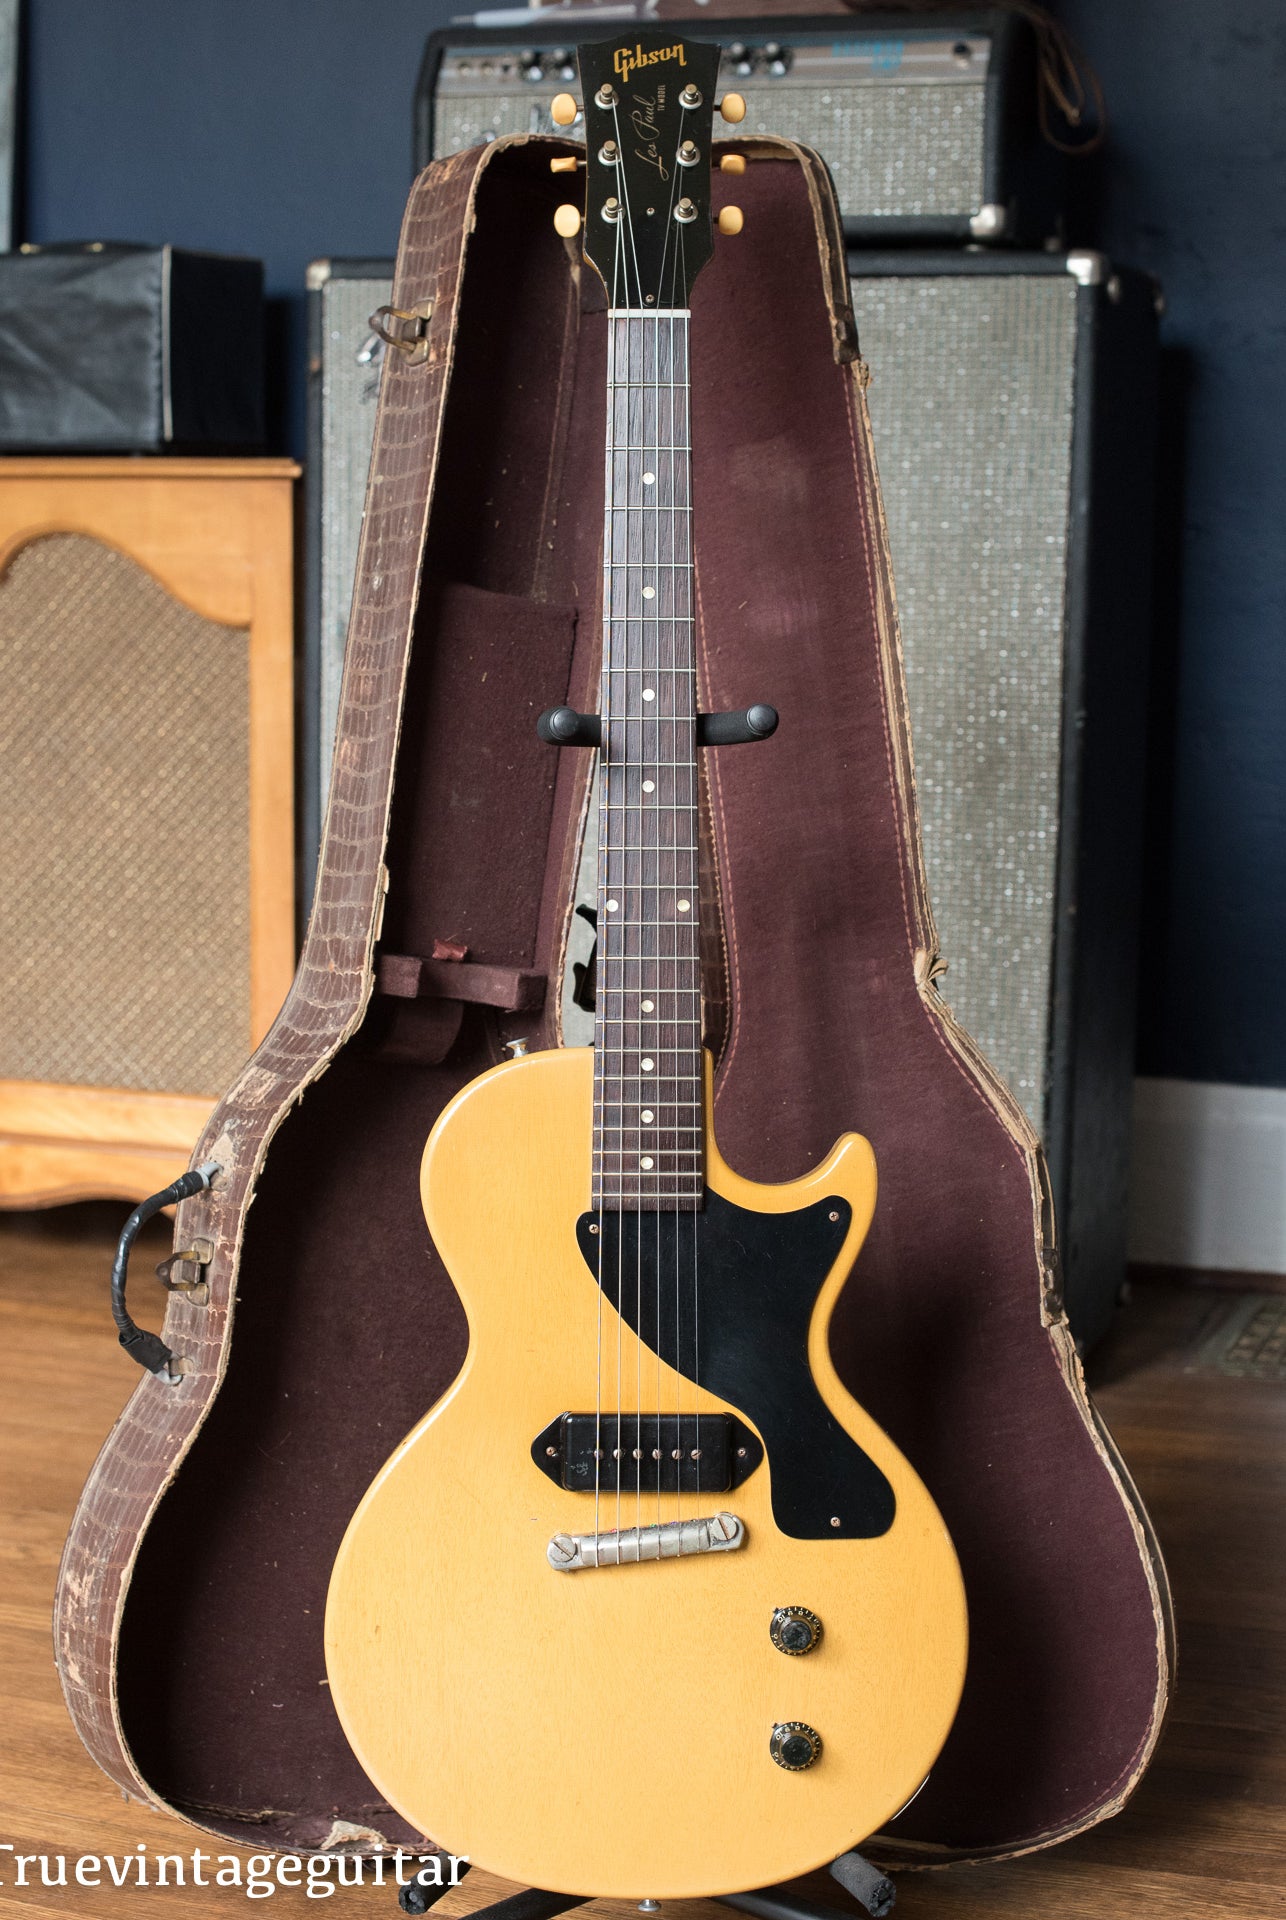 Vintage 1957 Gibson Les Paul TV Yellow guitar